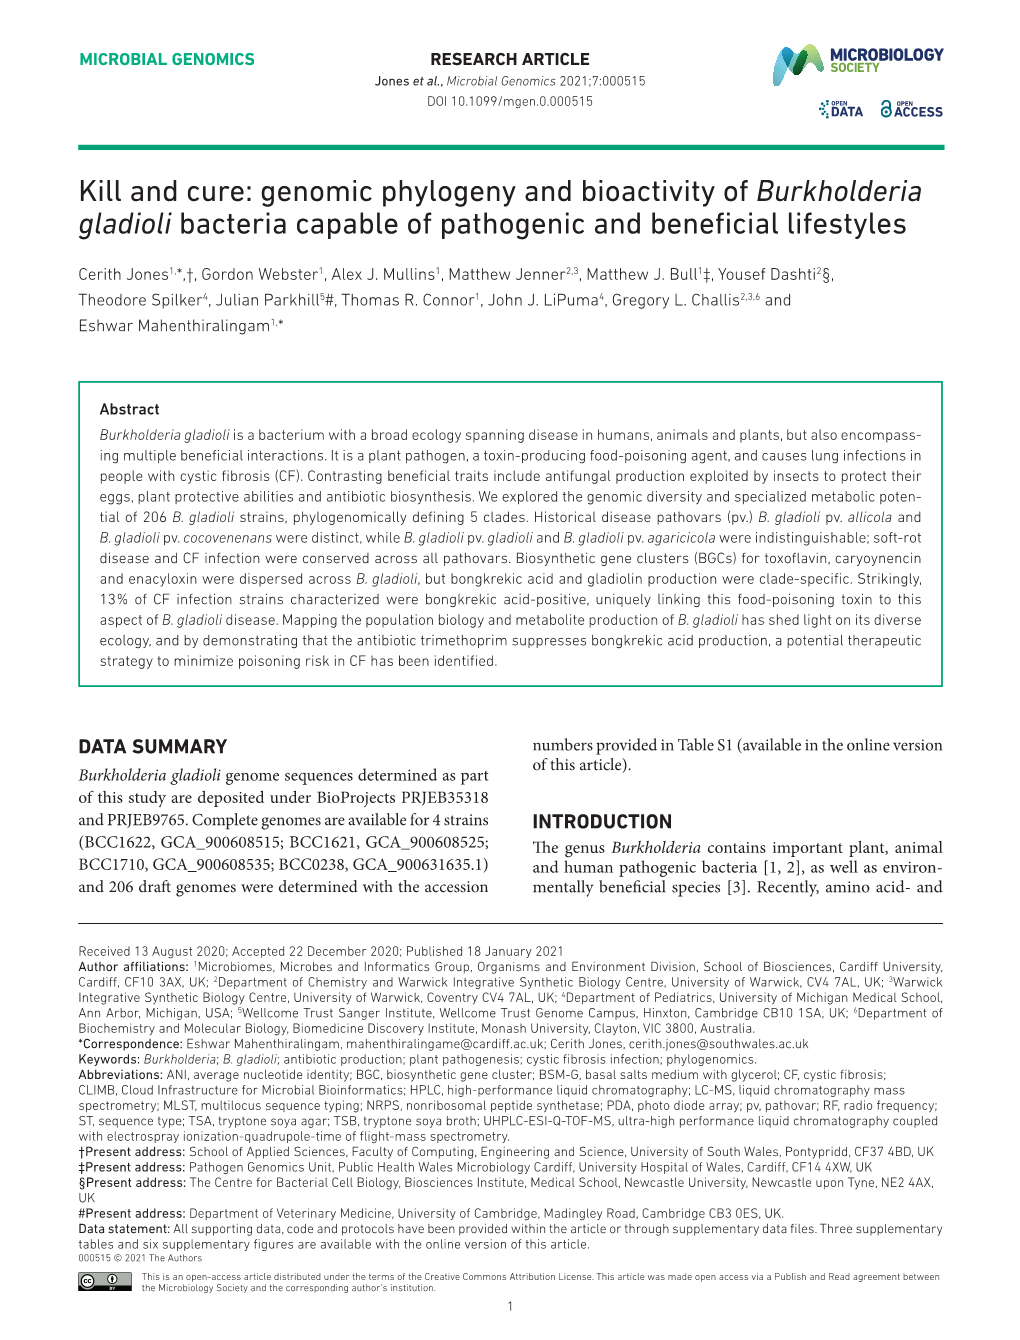 Burkholderia Gladioli Bacteria Capable of Pathogenic and Beneficial Lifestyles